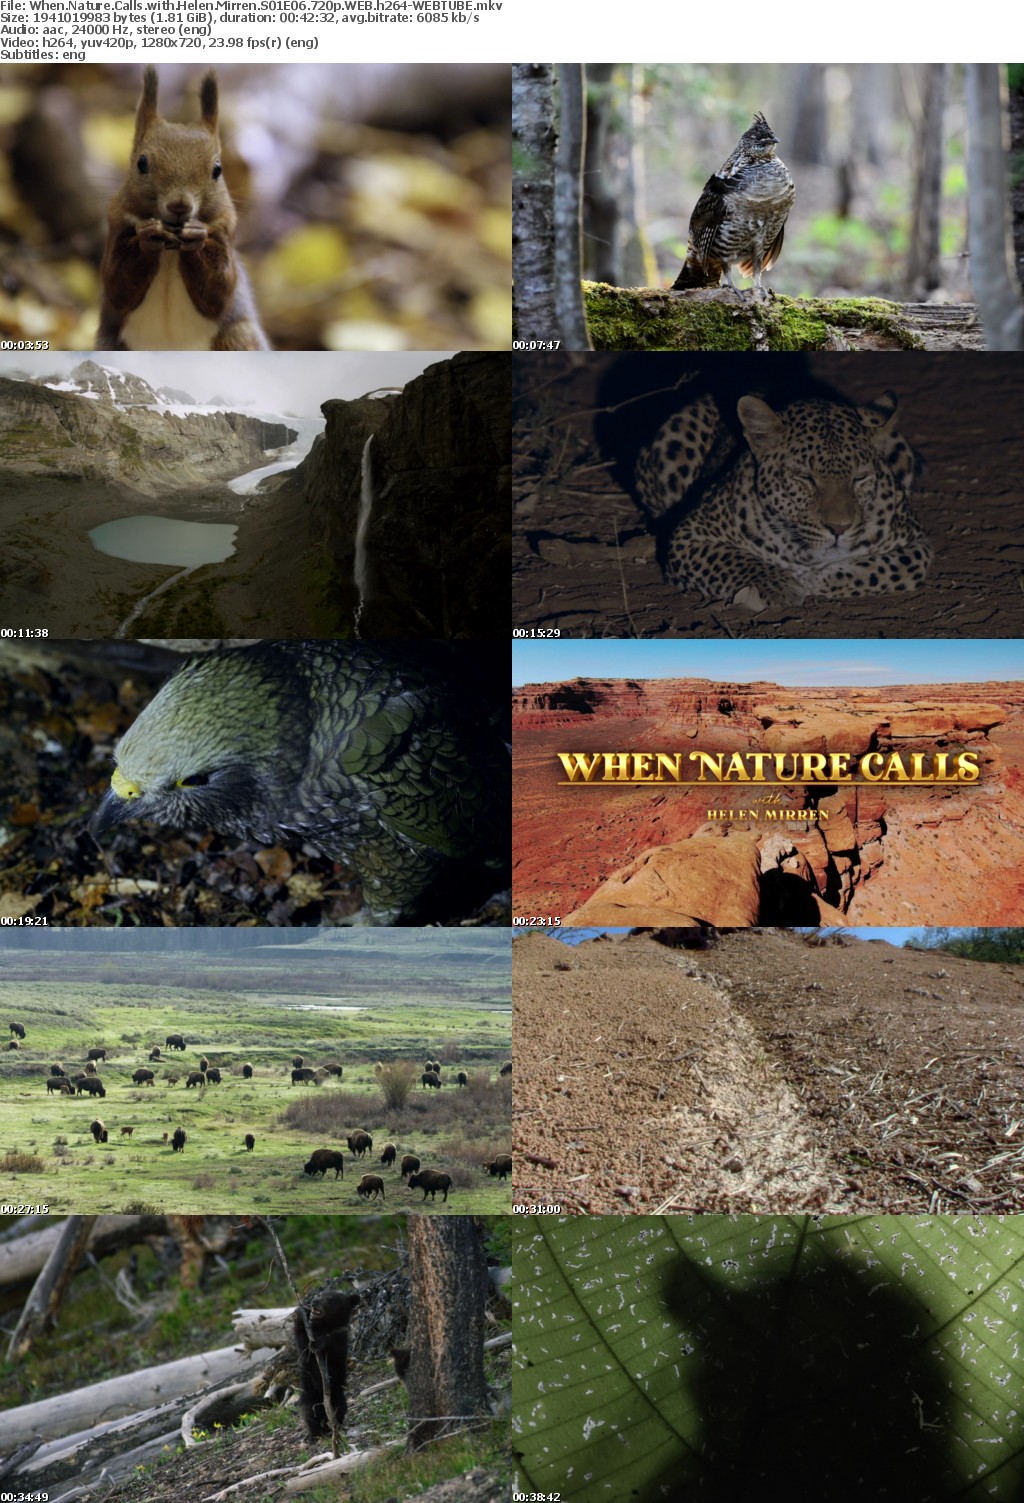 When Nature Calls with Helen Mirren S01E06 720p WEB h264-WEBTUBE